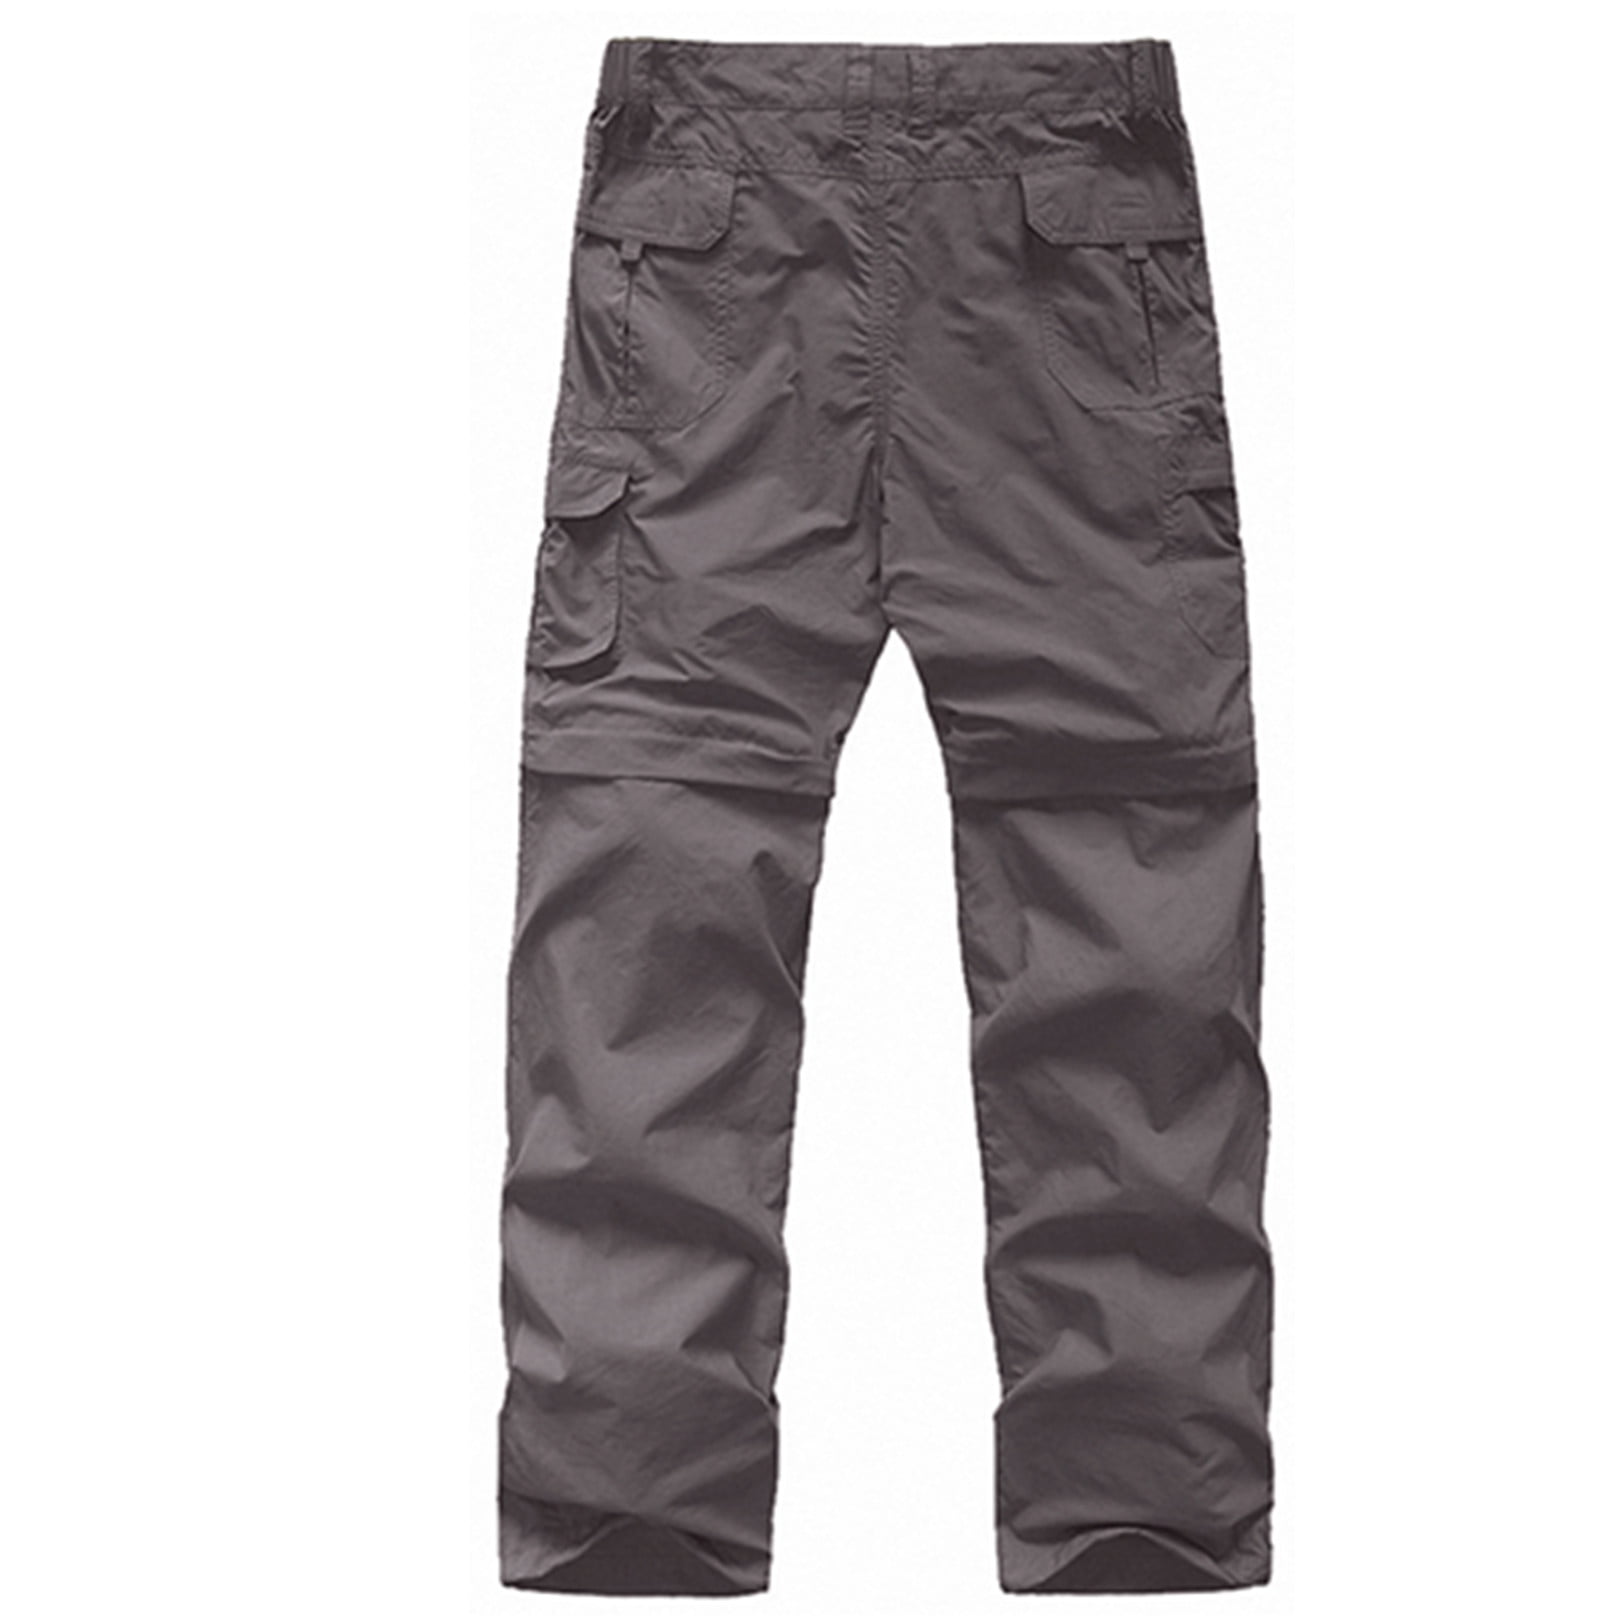 Boy's Cargo Pants, Kids' Casual Outdoor Quick Dry Waterproof Hiking  Climbing Convertible Zip Off Pants 